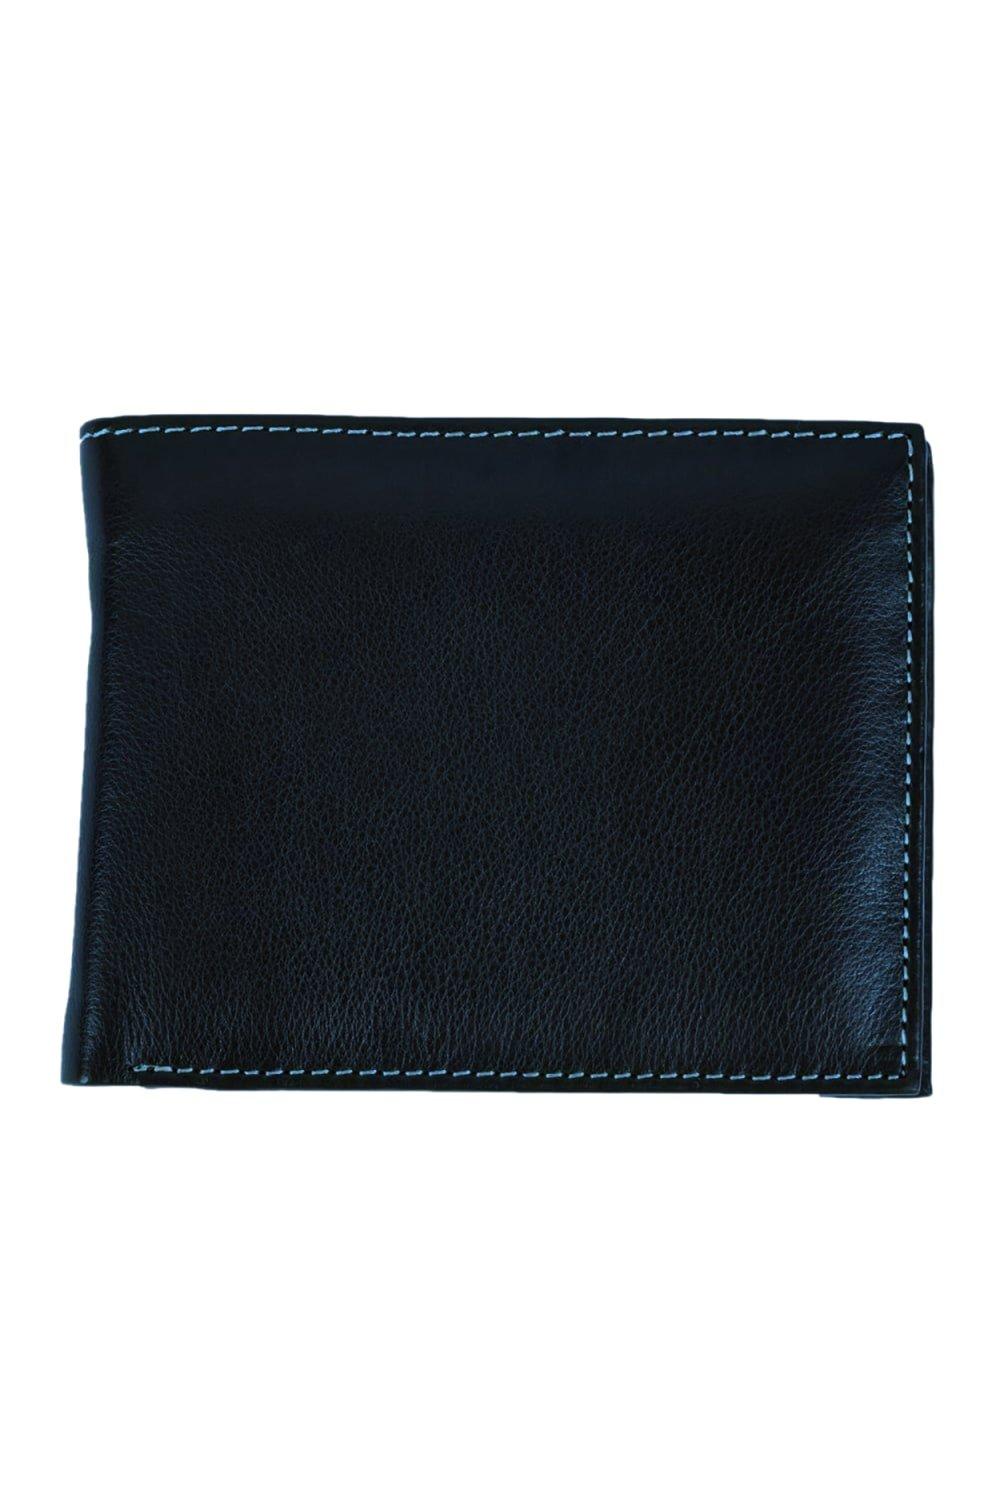 Кошелек Mark Trifold с карманом для монет Eastern Counties Leather, темно-синий кошелек для монет бетси eastern counties leather красный